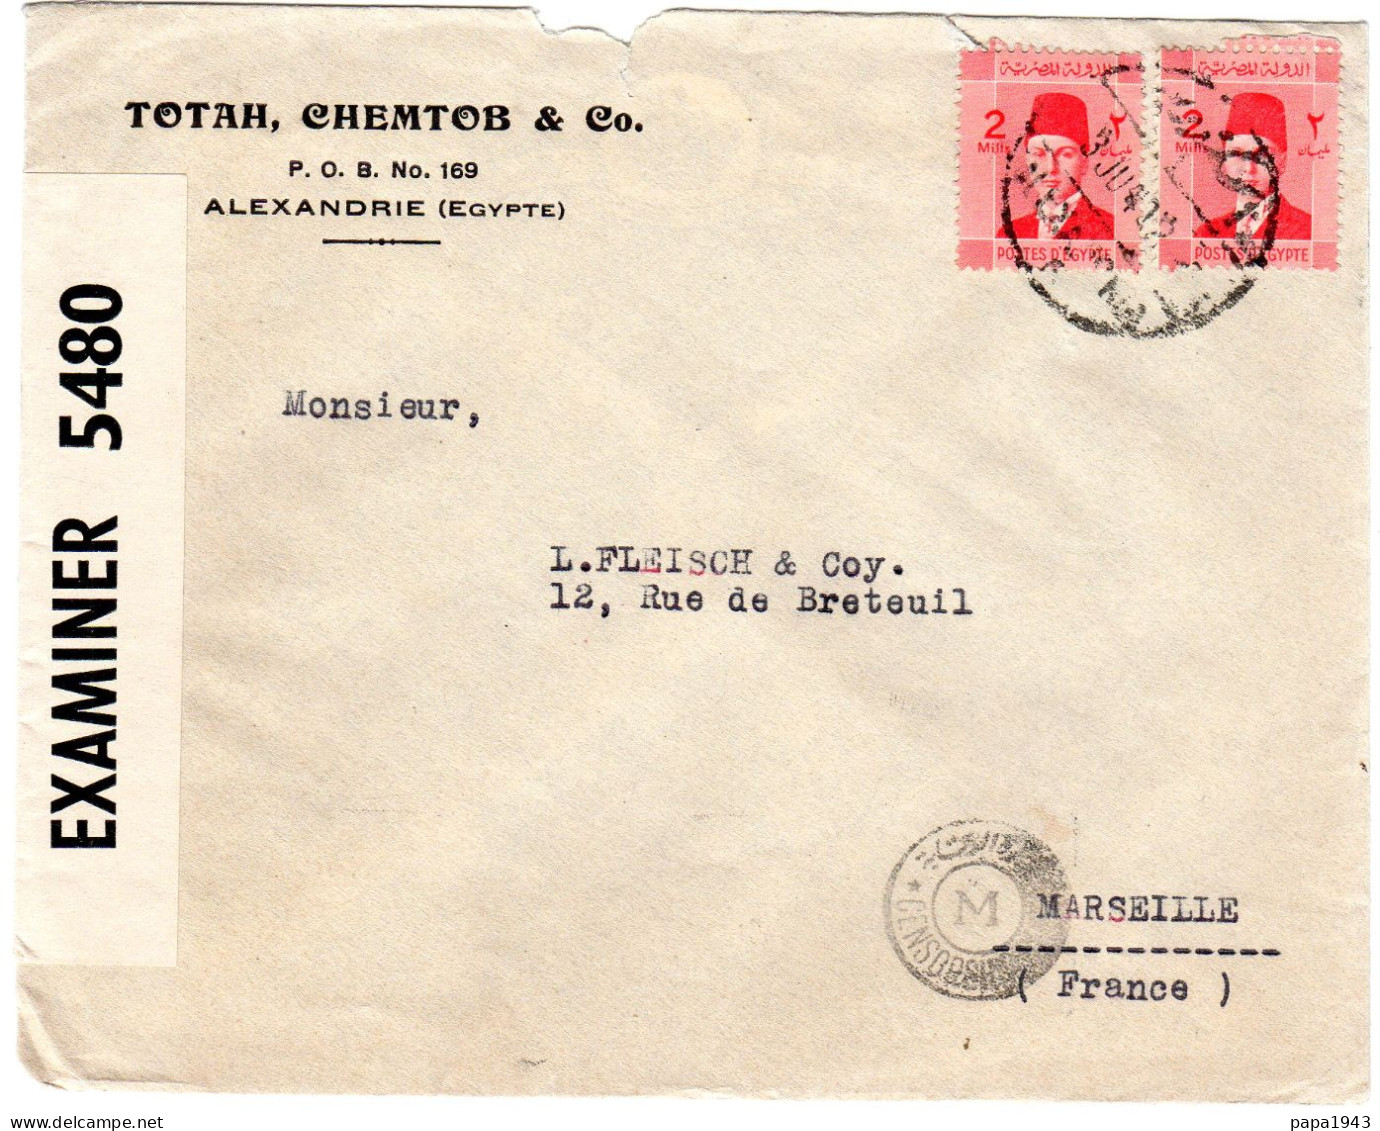 1942  "  TOTAH CHEMTOB & Co ALEXANDRIE EGYPTE "  Censure  " OPENED  BY  EXAMINER 5480 - Cartas & Documentos